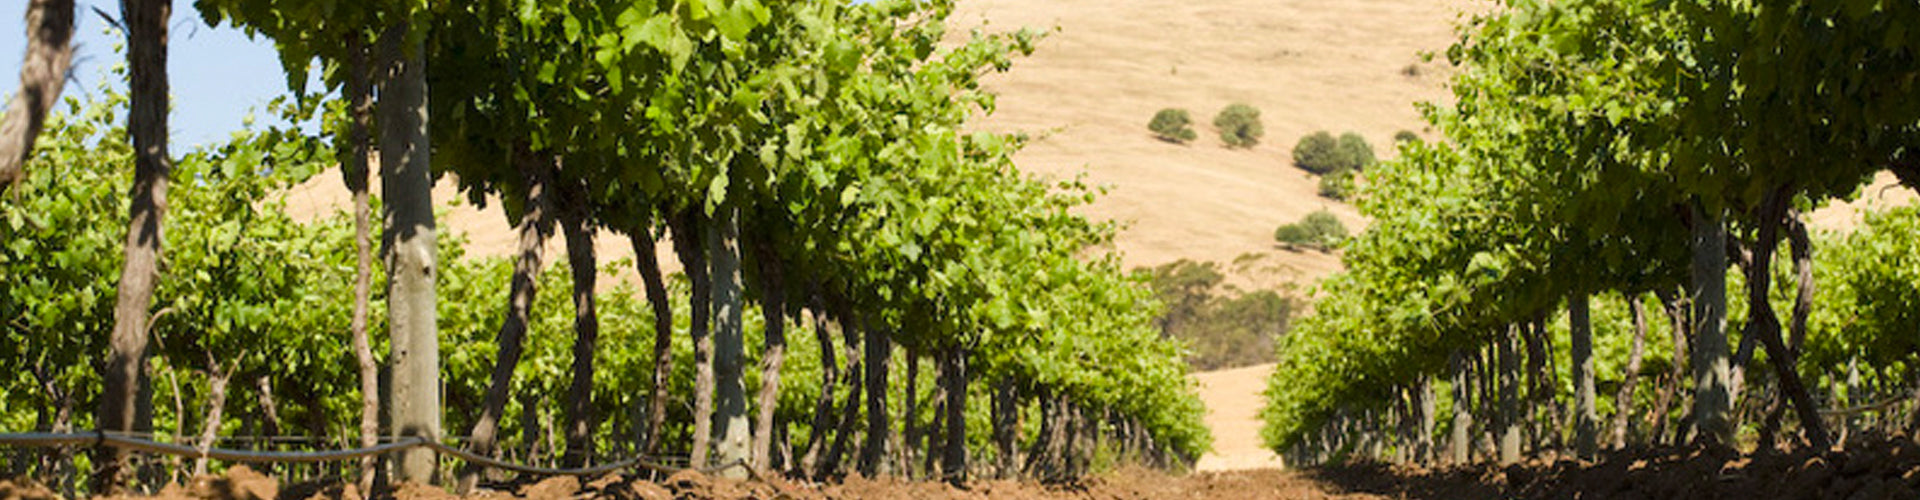 Charles Melton Vineyards in the Barossa Valley, South Australia